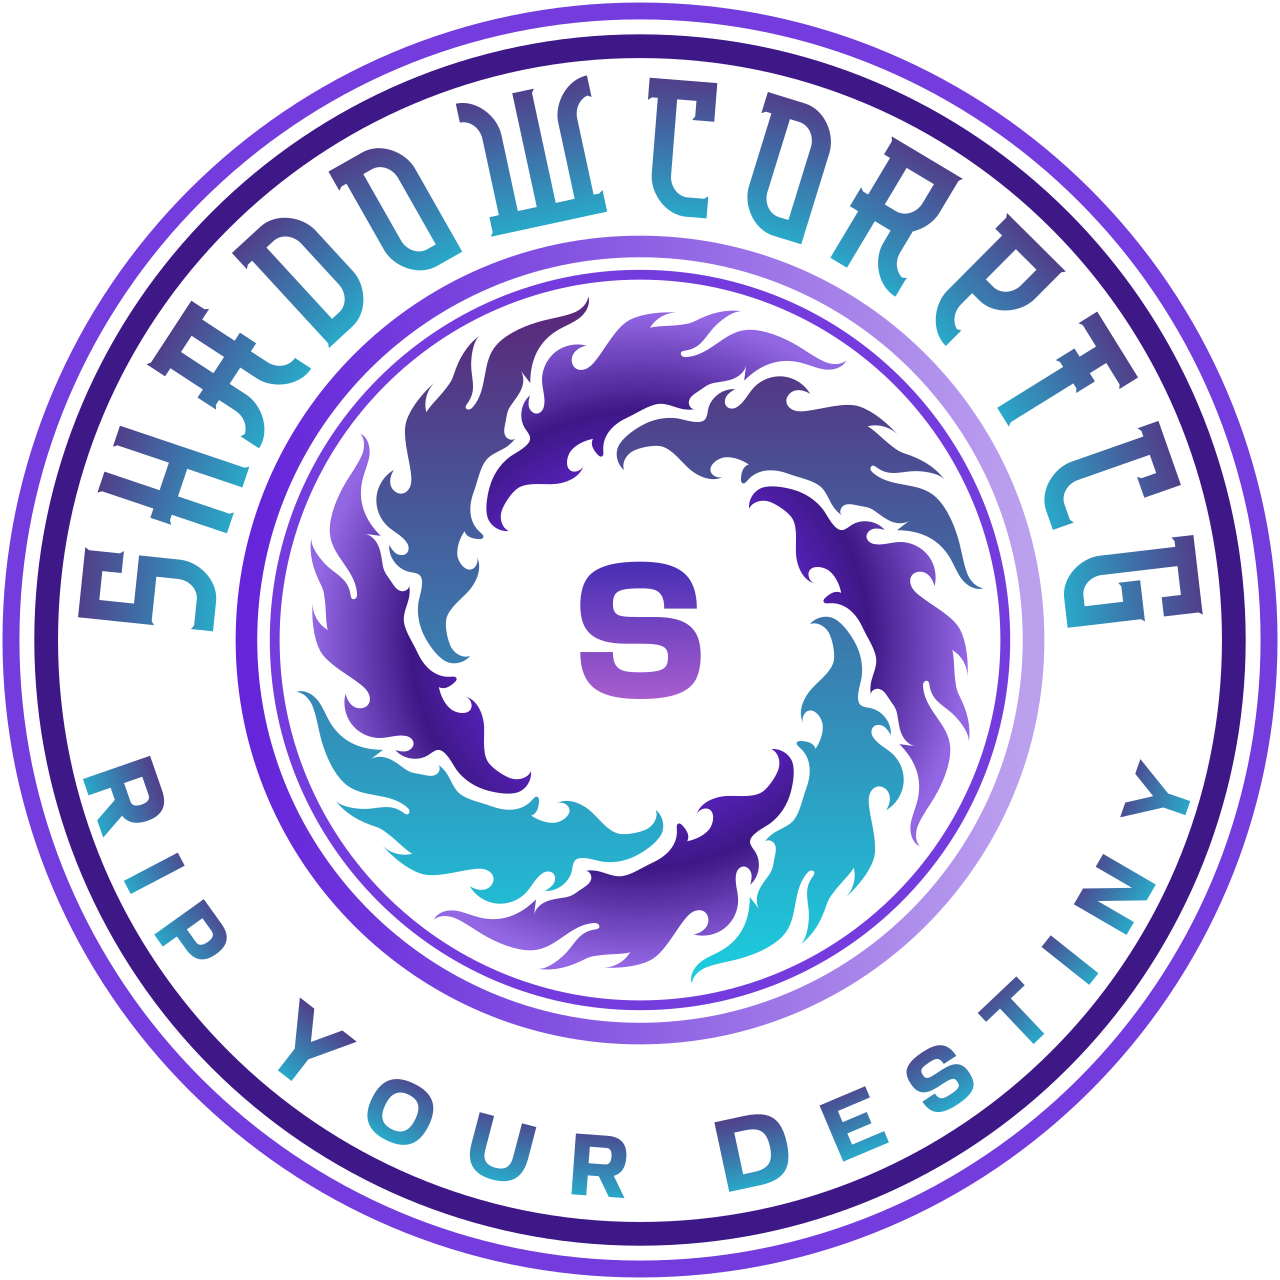 ShadowCorpTCG's logo